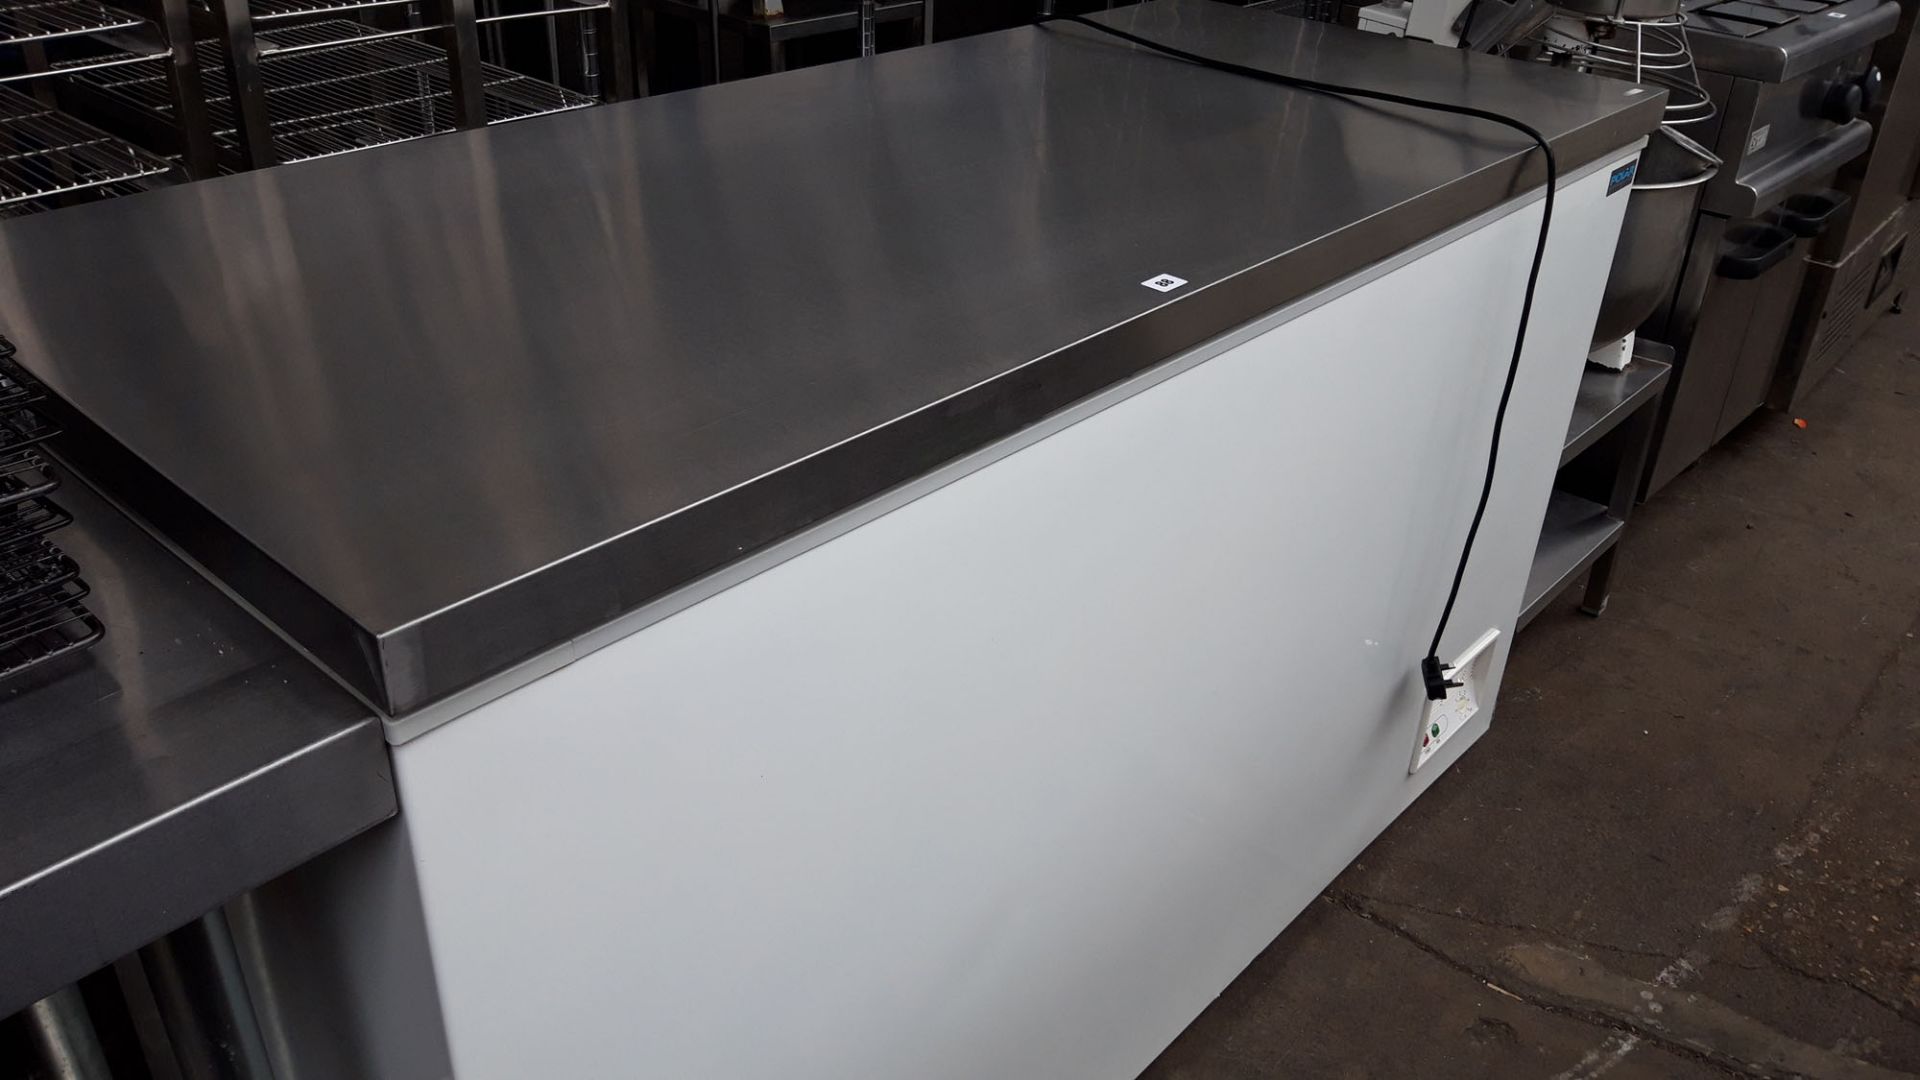 TN73 - 160cm Polar CE212-B chest freezer with stainless steel top